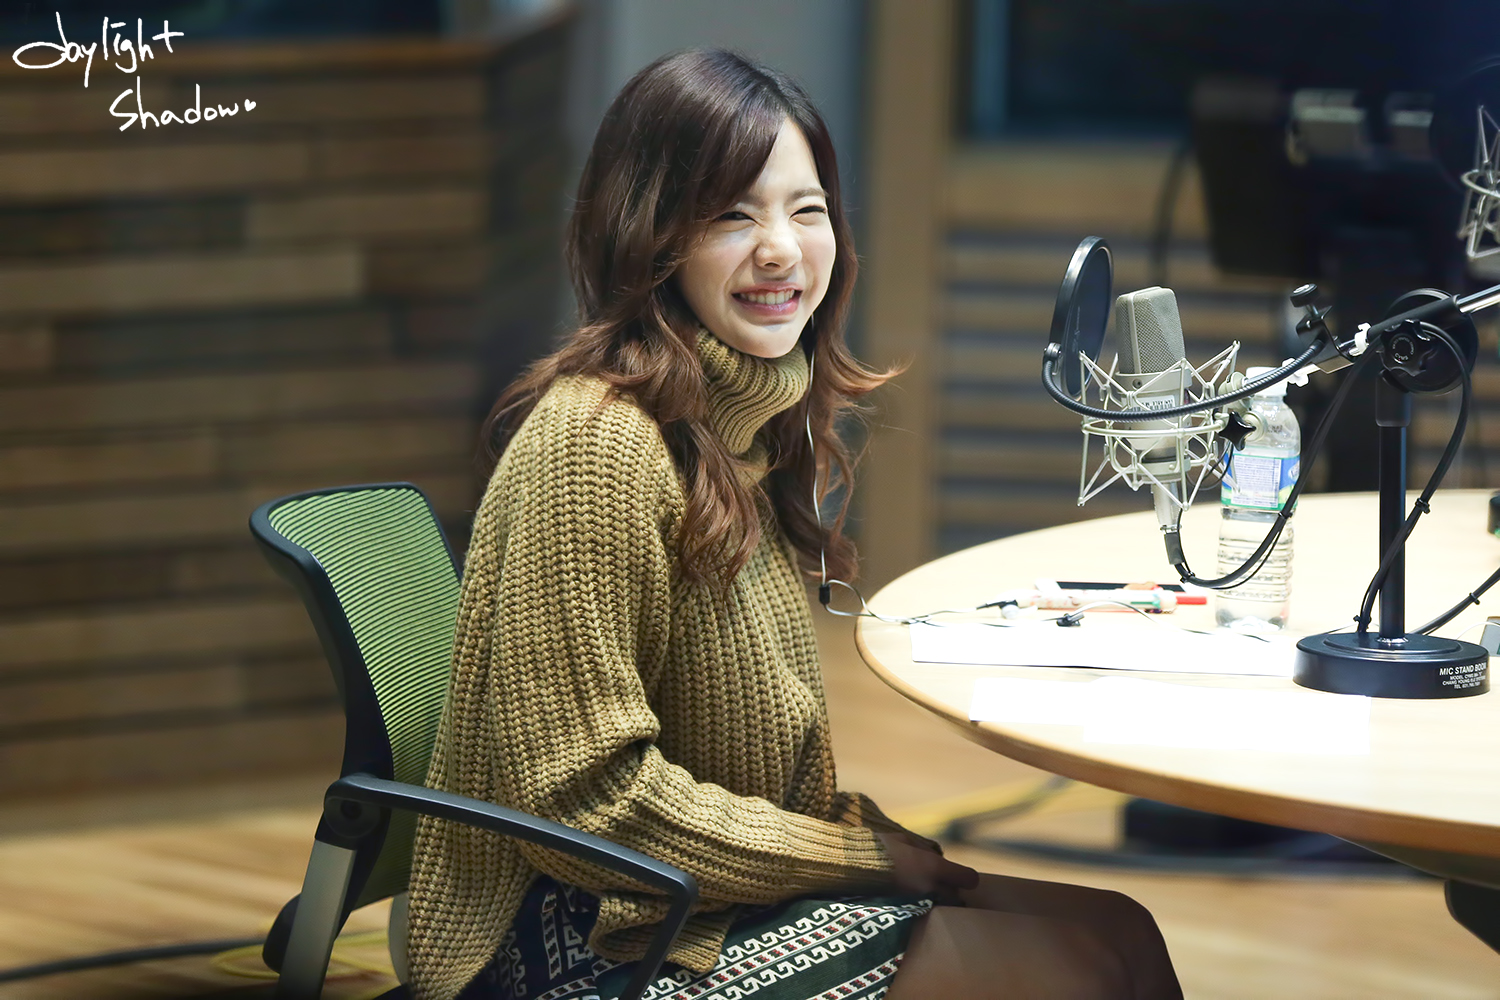 [OTHER][06-02-2015]Hình ảnh mới nhất từ DJ Sunny tại Radio MBC FM4U - "FM Date" - Page 32 2242B33E56A0B2E02024D4